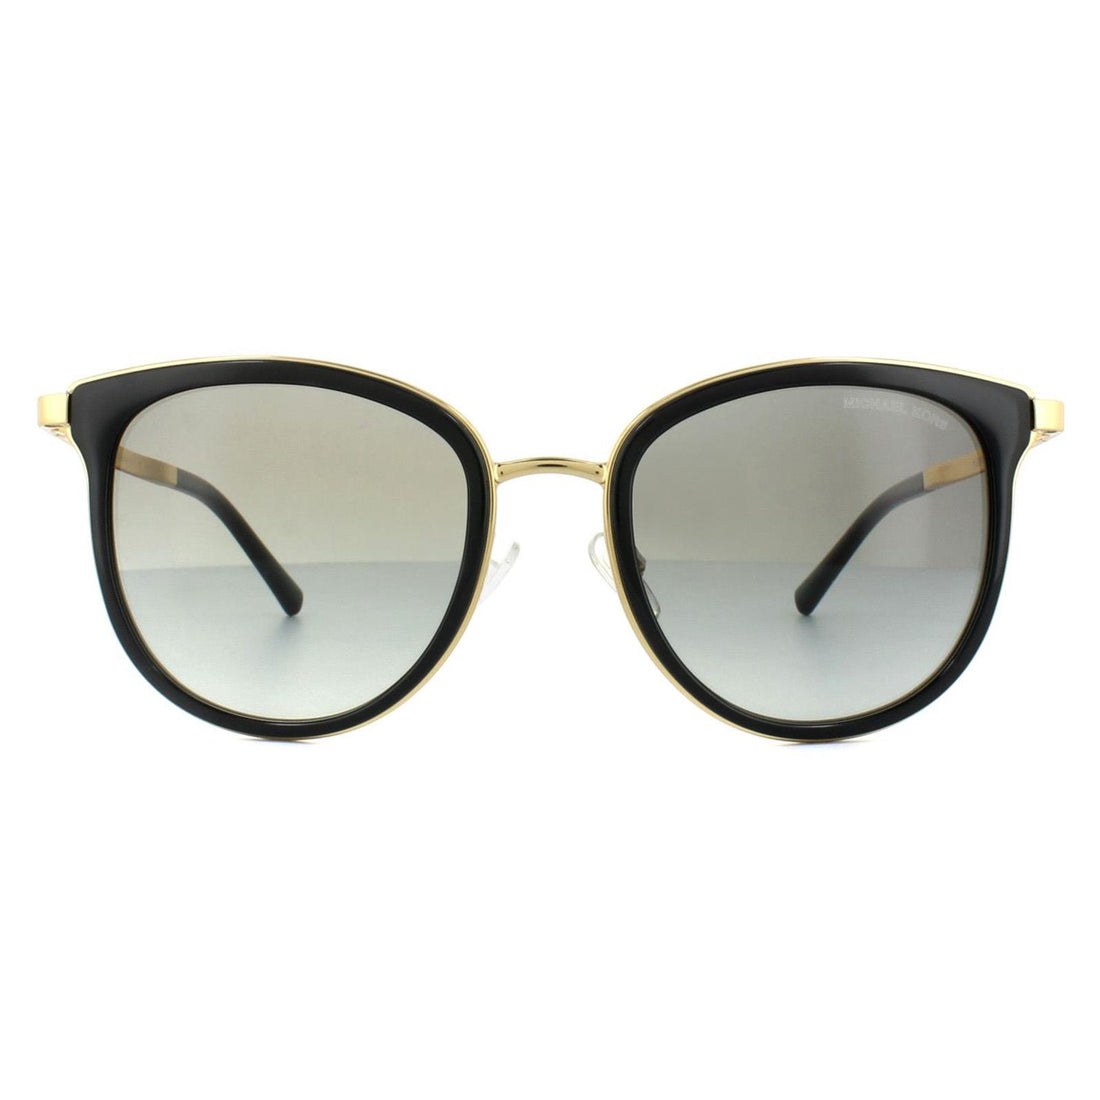 Michael Kors Adrianna 1 MK1010 Sunglasses Black Gold Grey Gradient